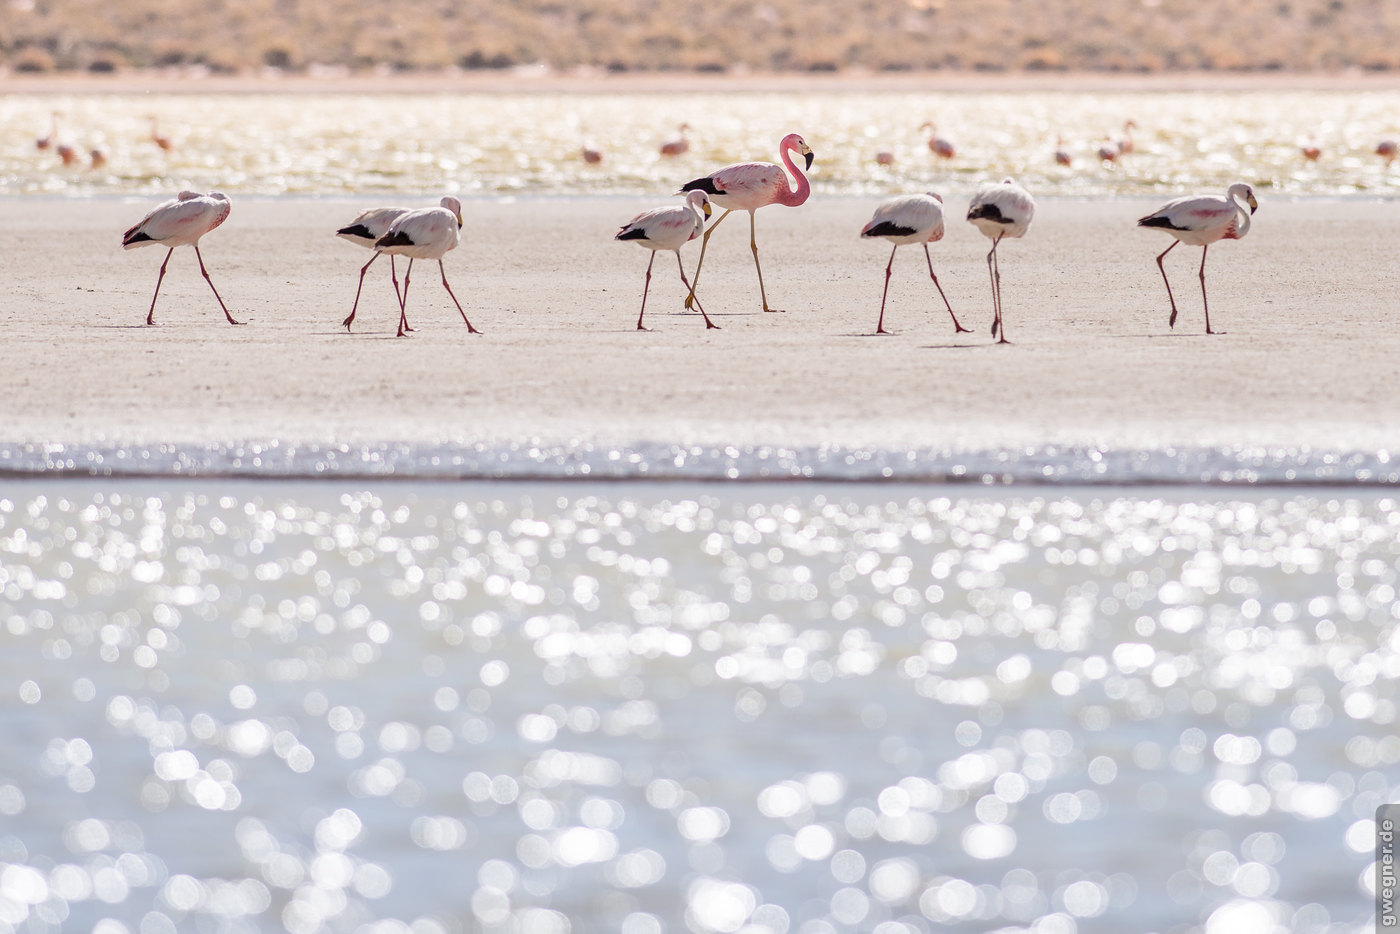 Bolivien Flamingos Lagune gwegner